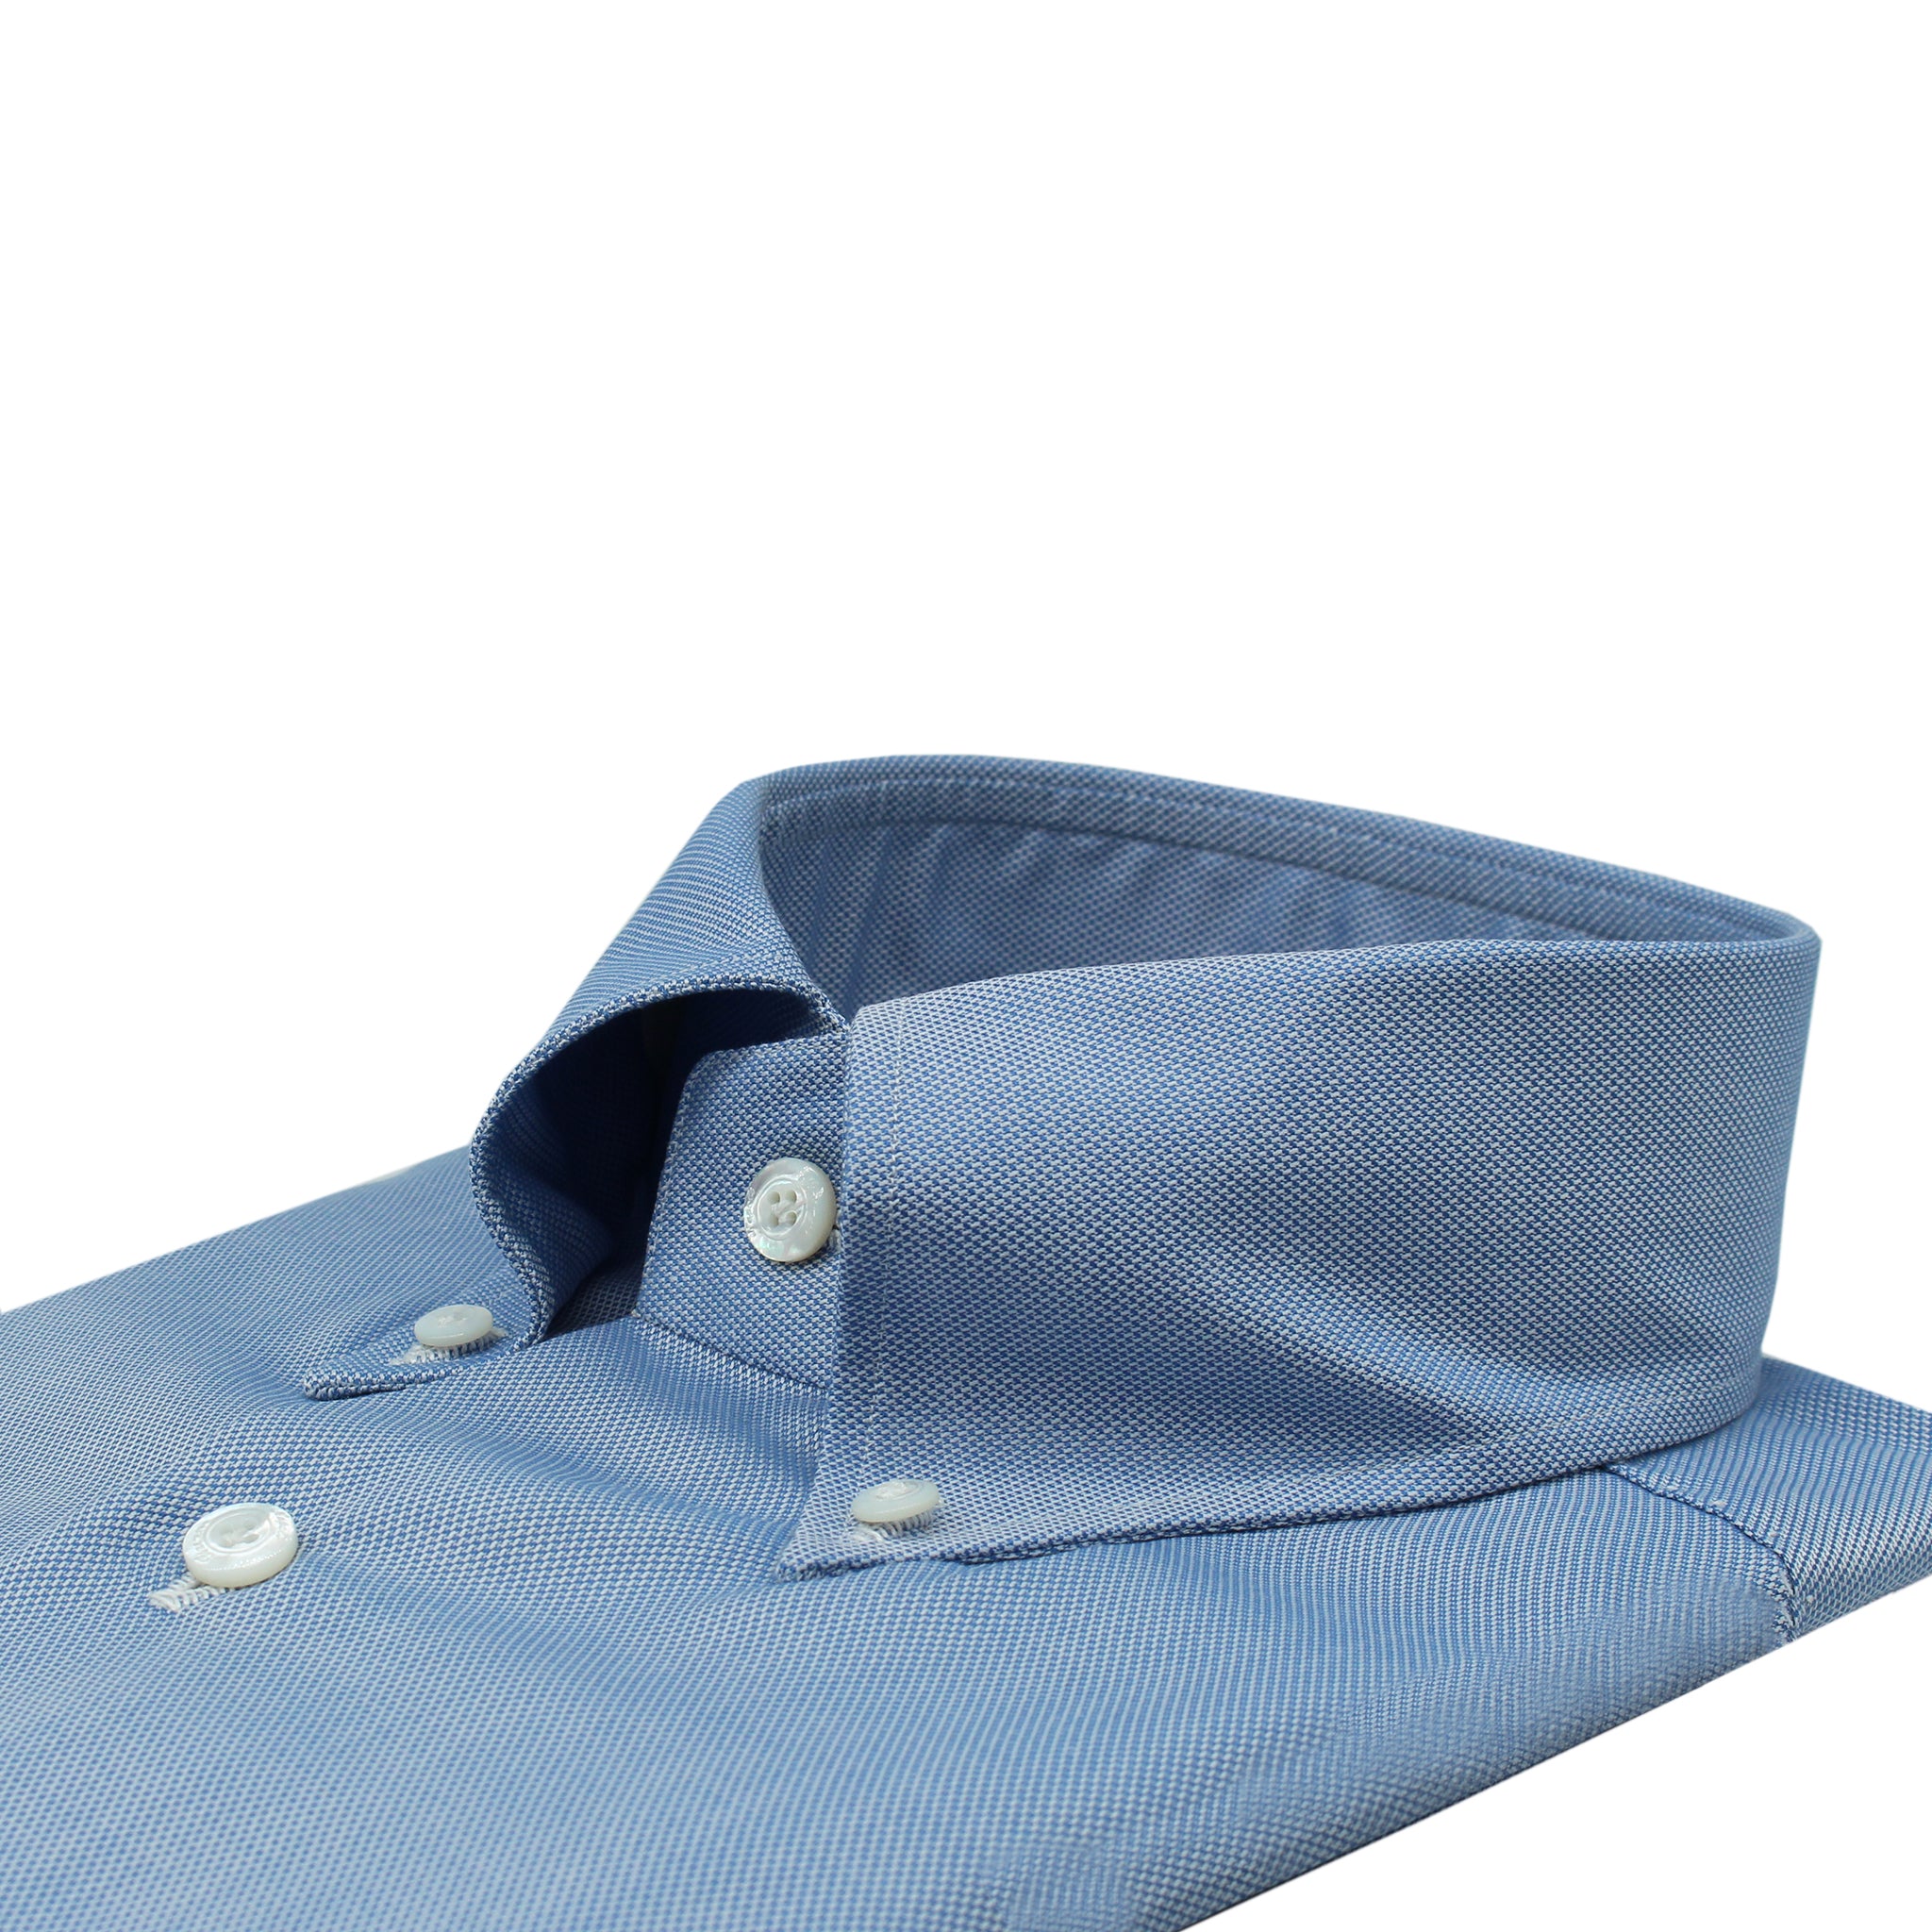 Classic Naples regular-fit cotton oxford blue shirt button down